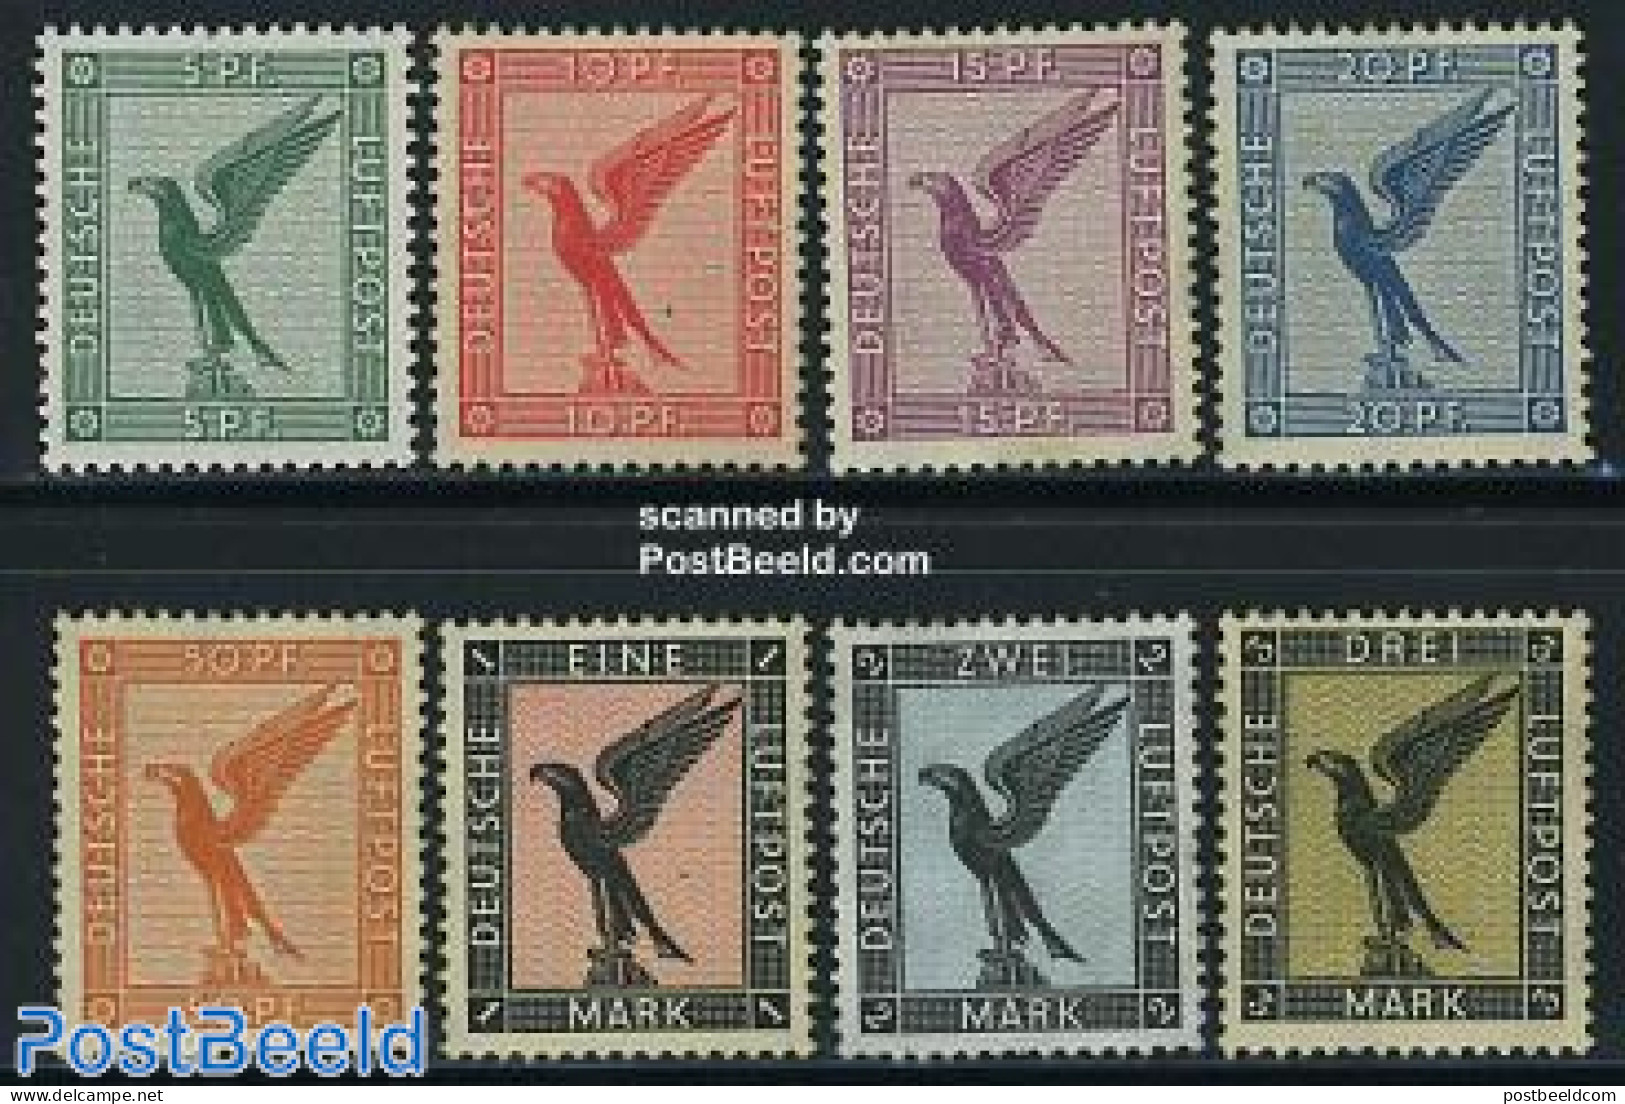 Germany, Empire 1926 Airmail Definitives 8v, Unused (hinged), Nature - Birds - Birds Of Prey - Neufs